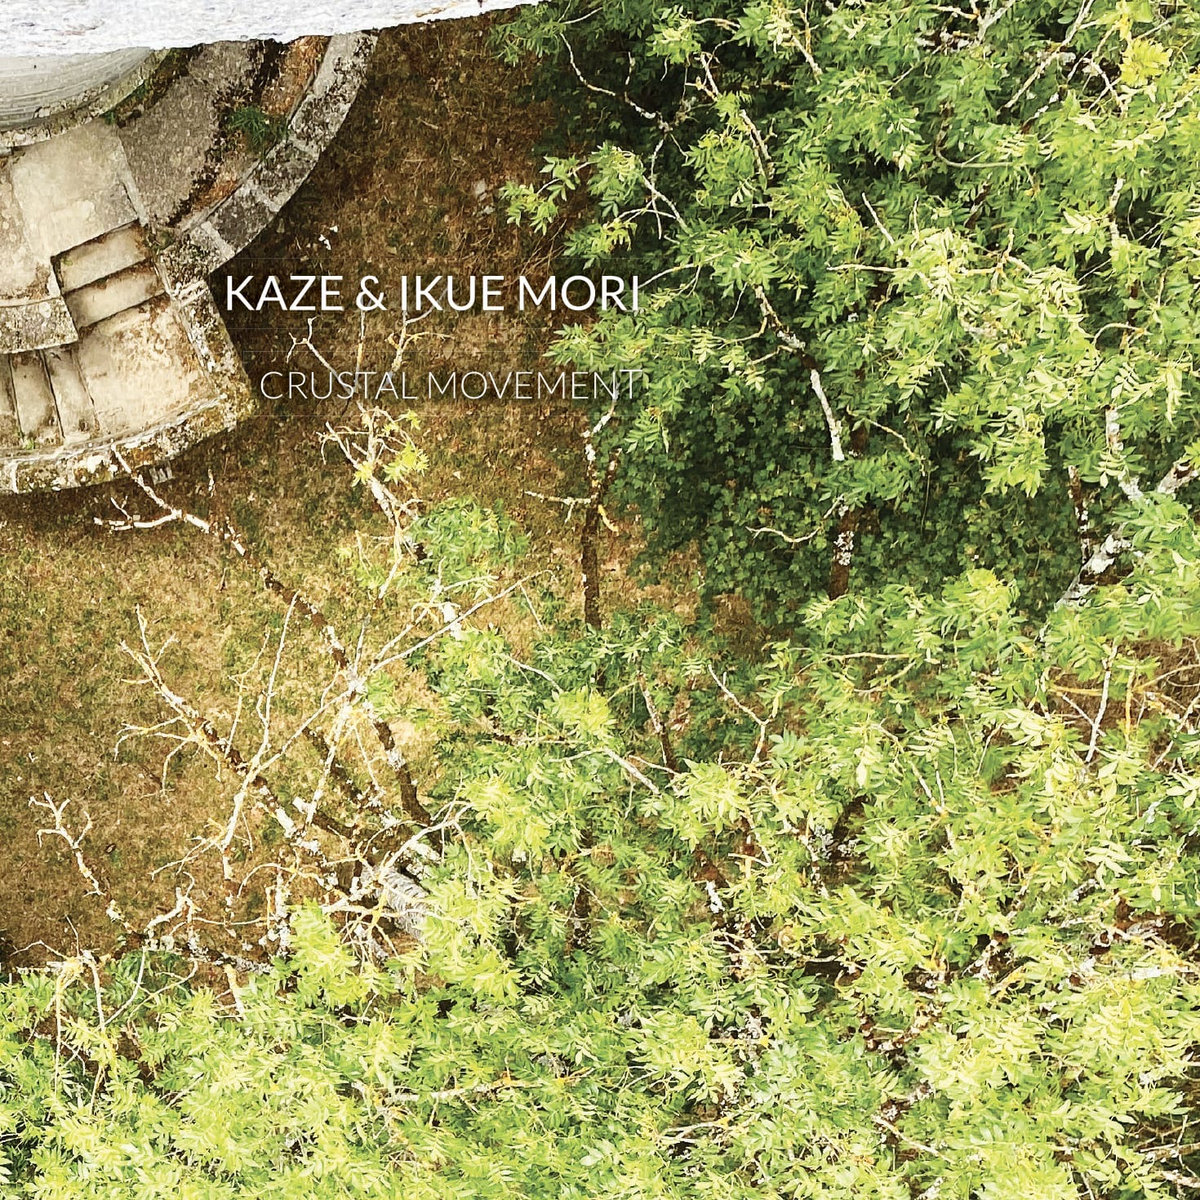 KAZE & IKUE MORI: Crustal Movement